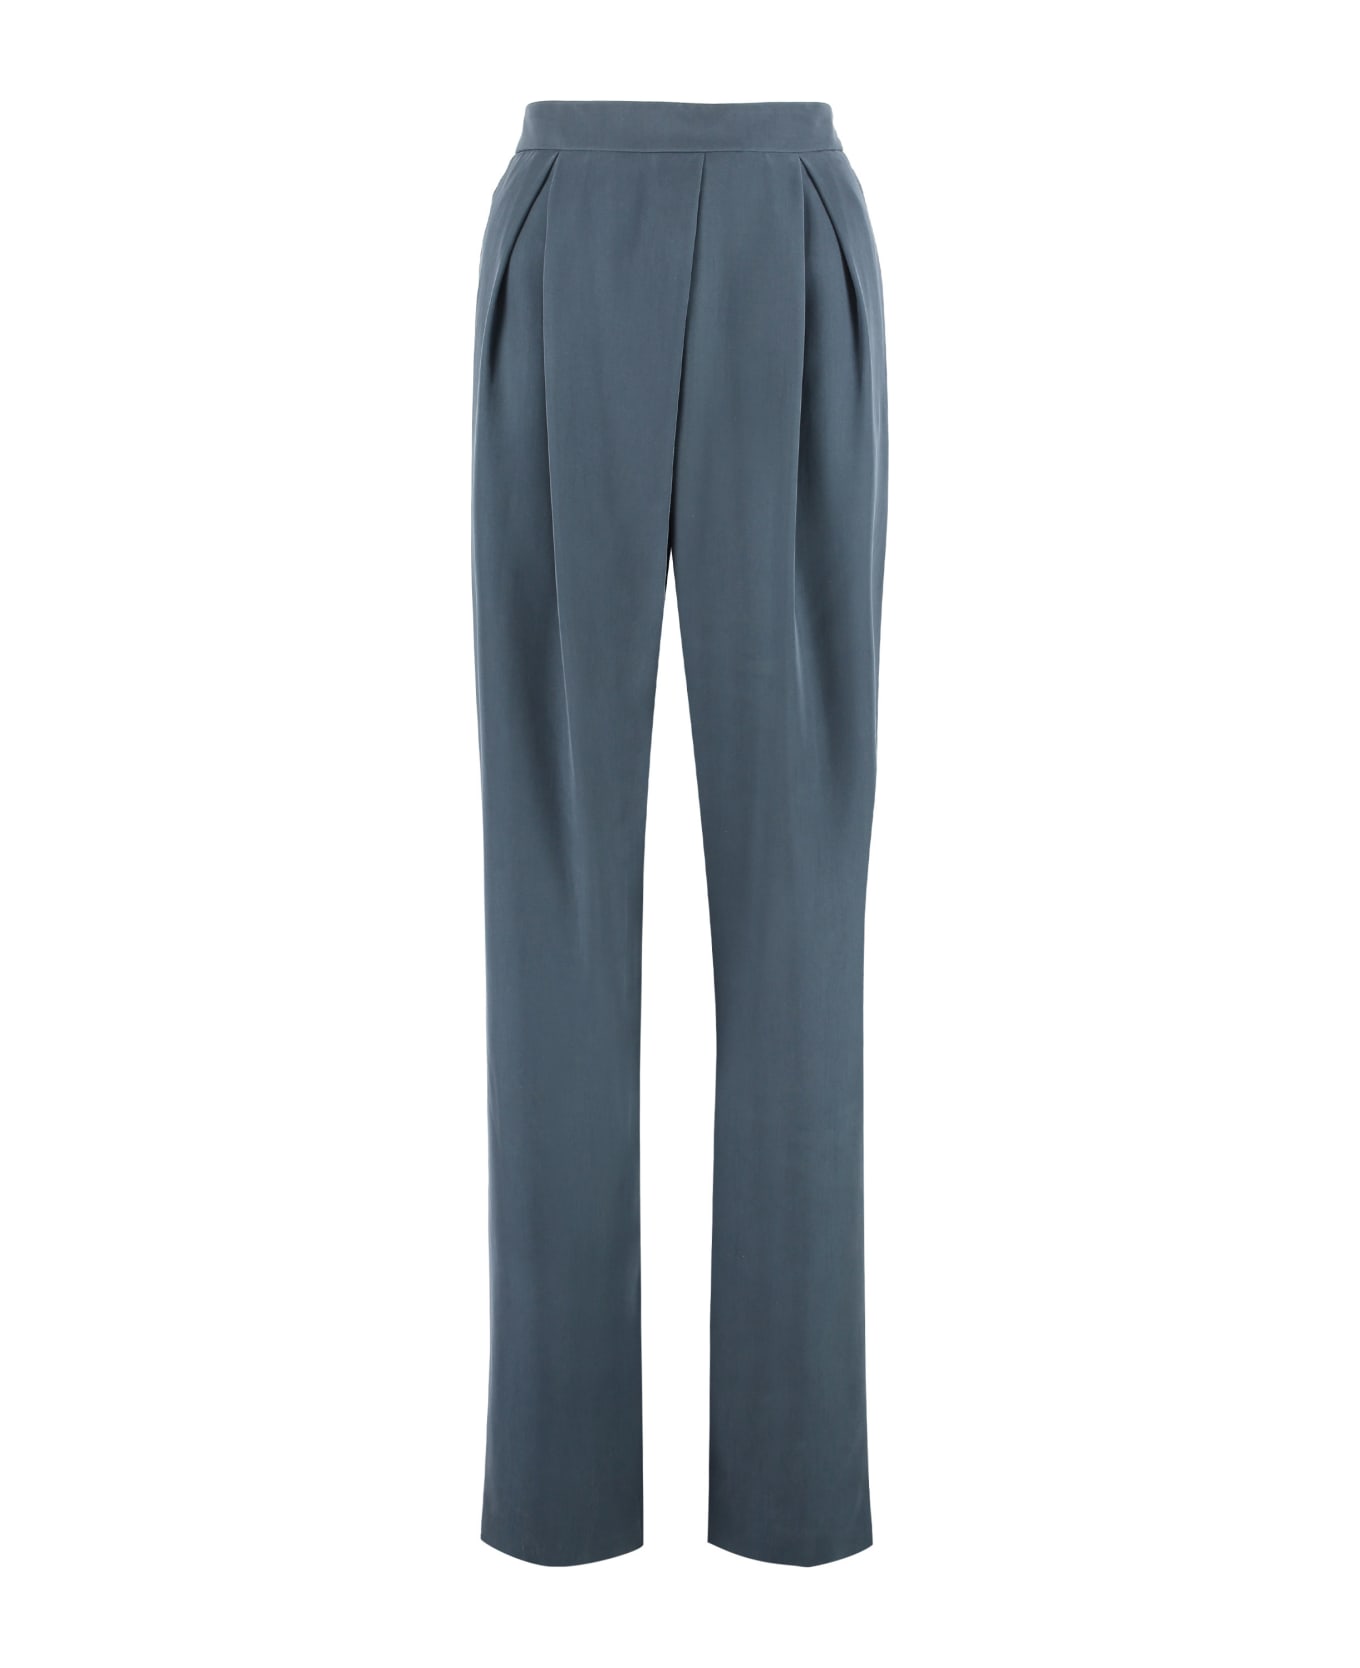 Giorgio Armani Silk Trousers - grey